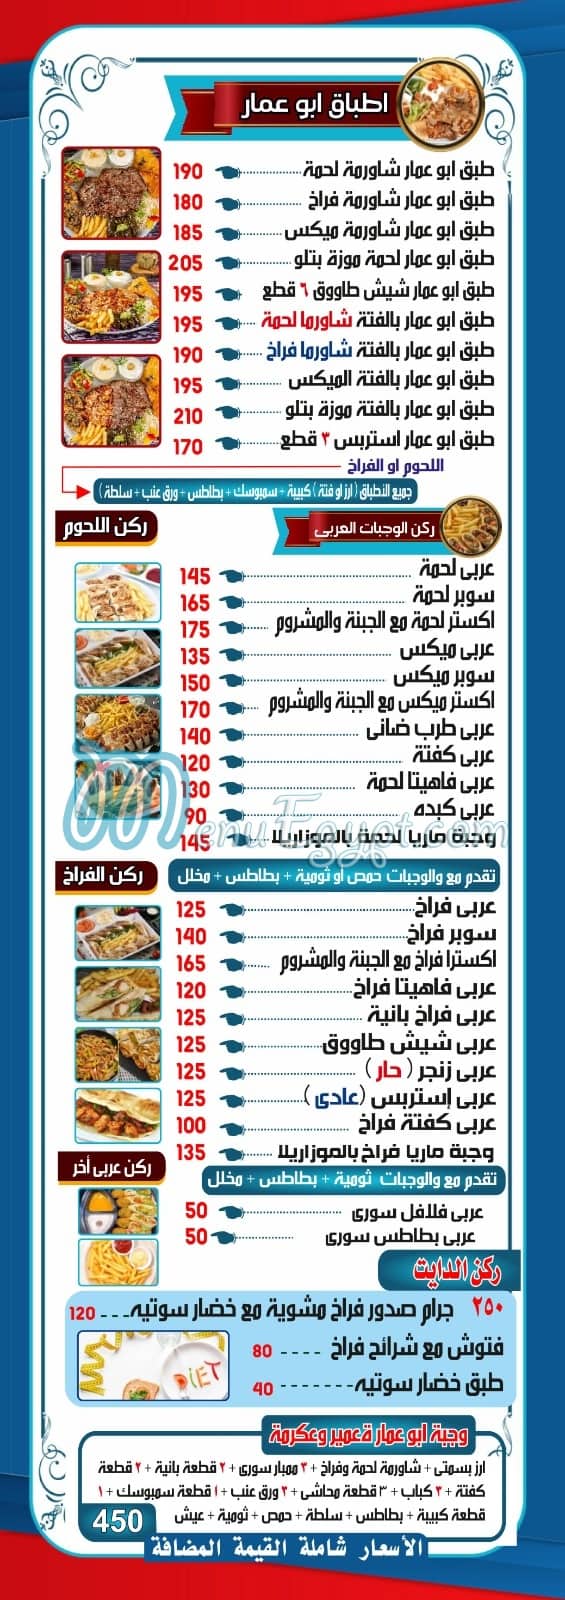 مطعم ابو عمار السورى مصر